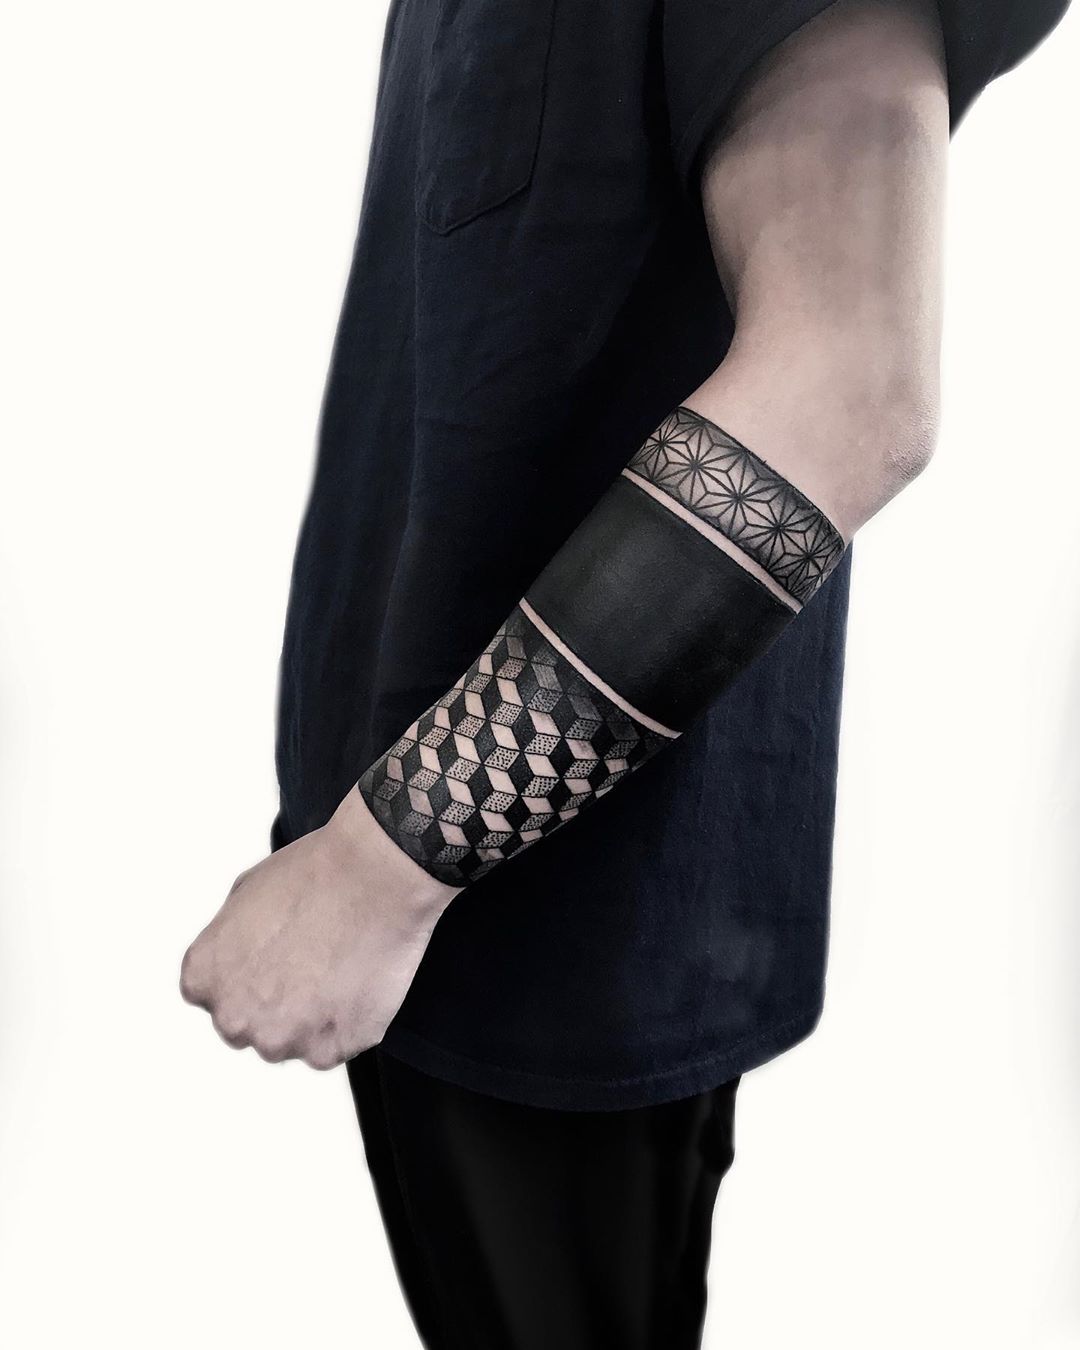 Blackwork armband by tattooist NEENO